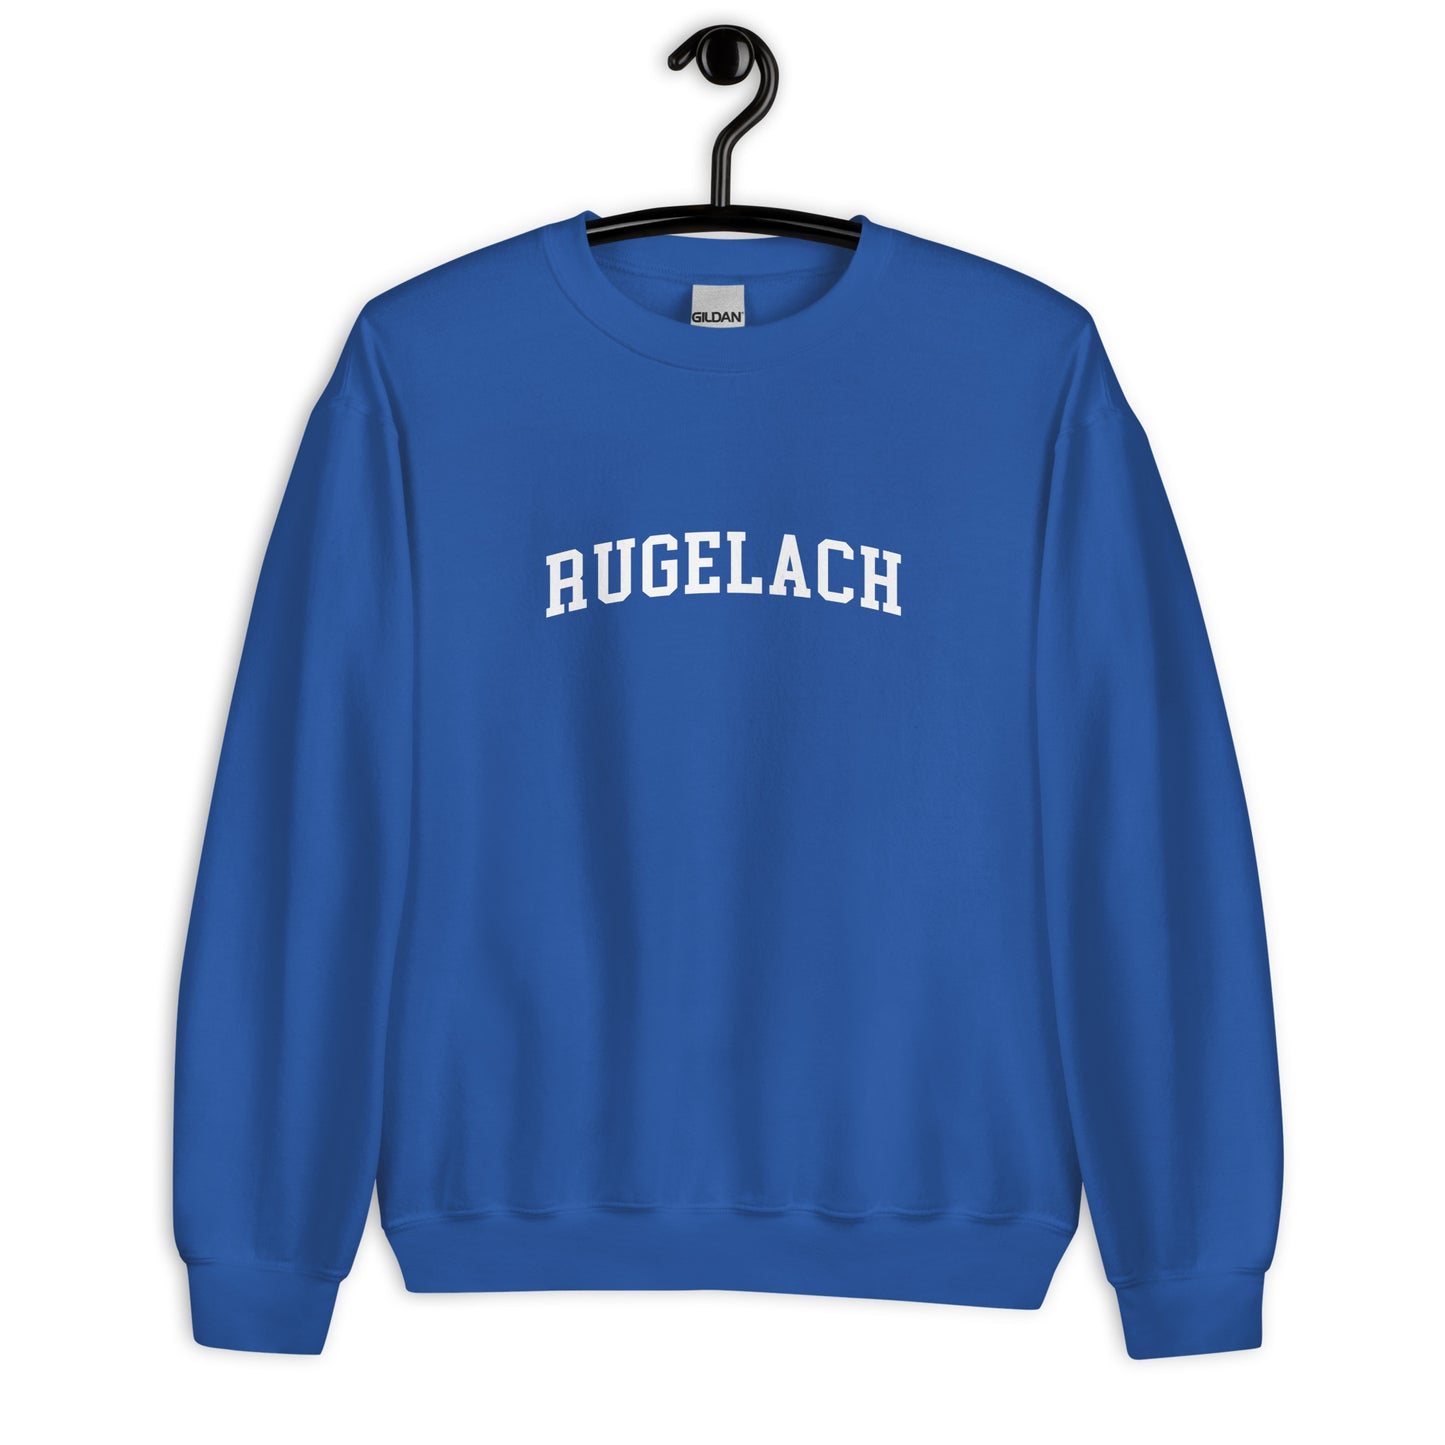 Rugelach Sweatshirt - Arched Font